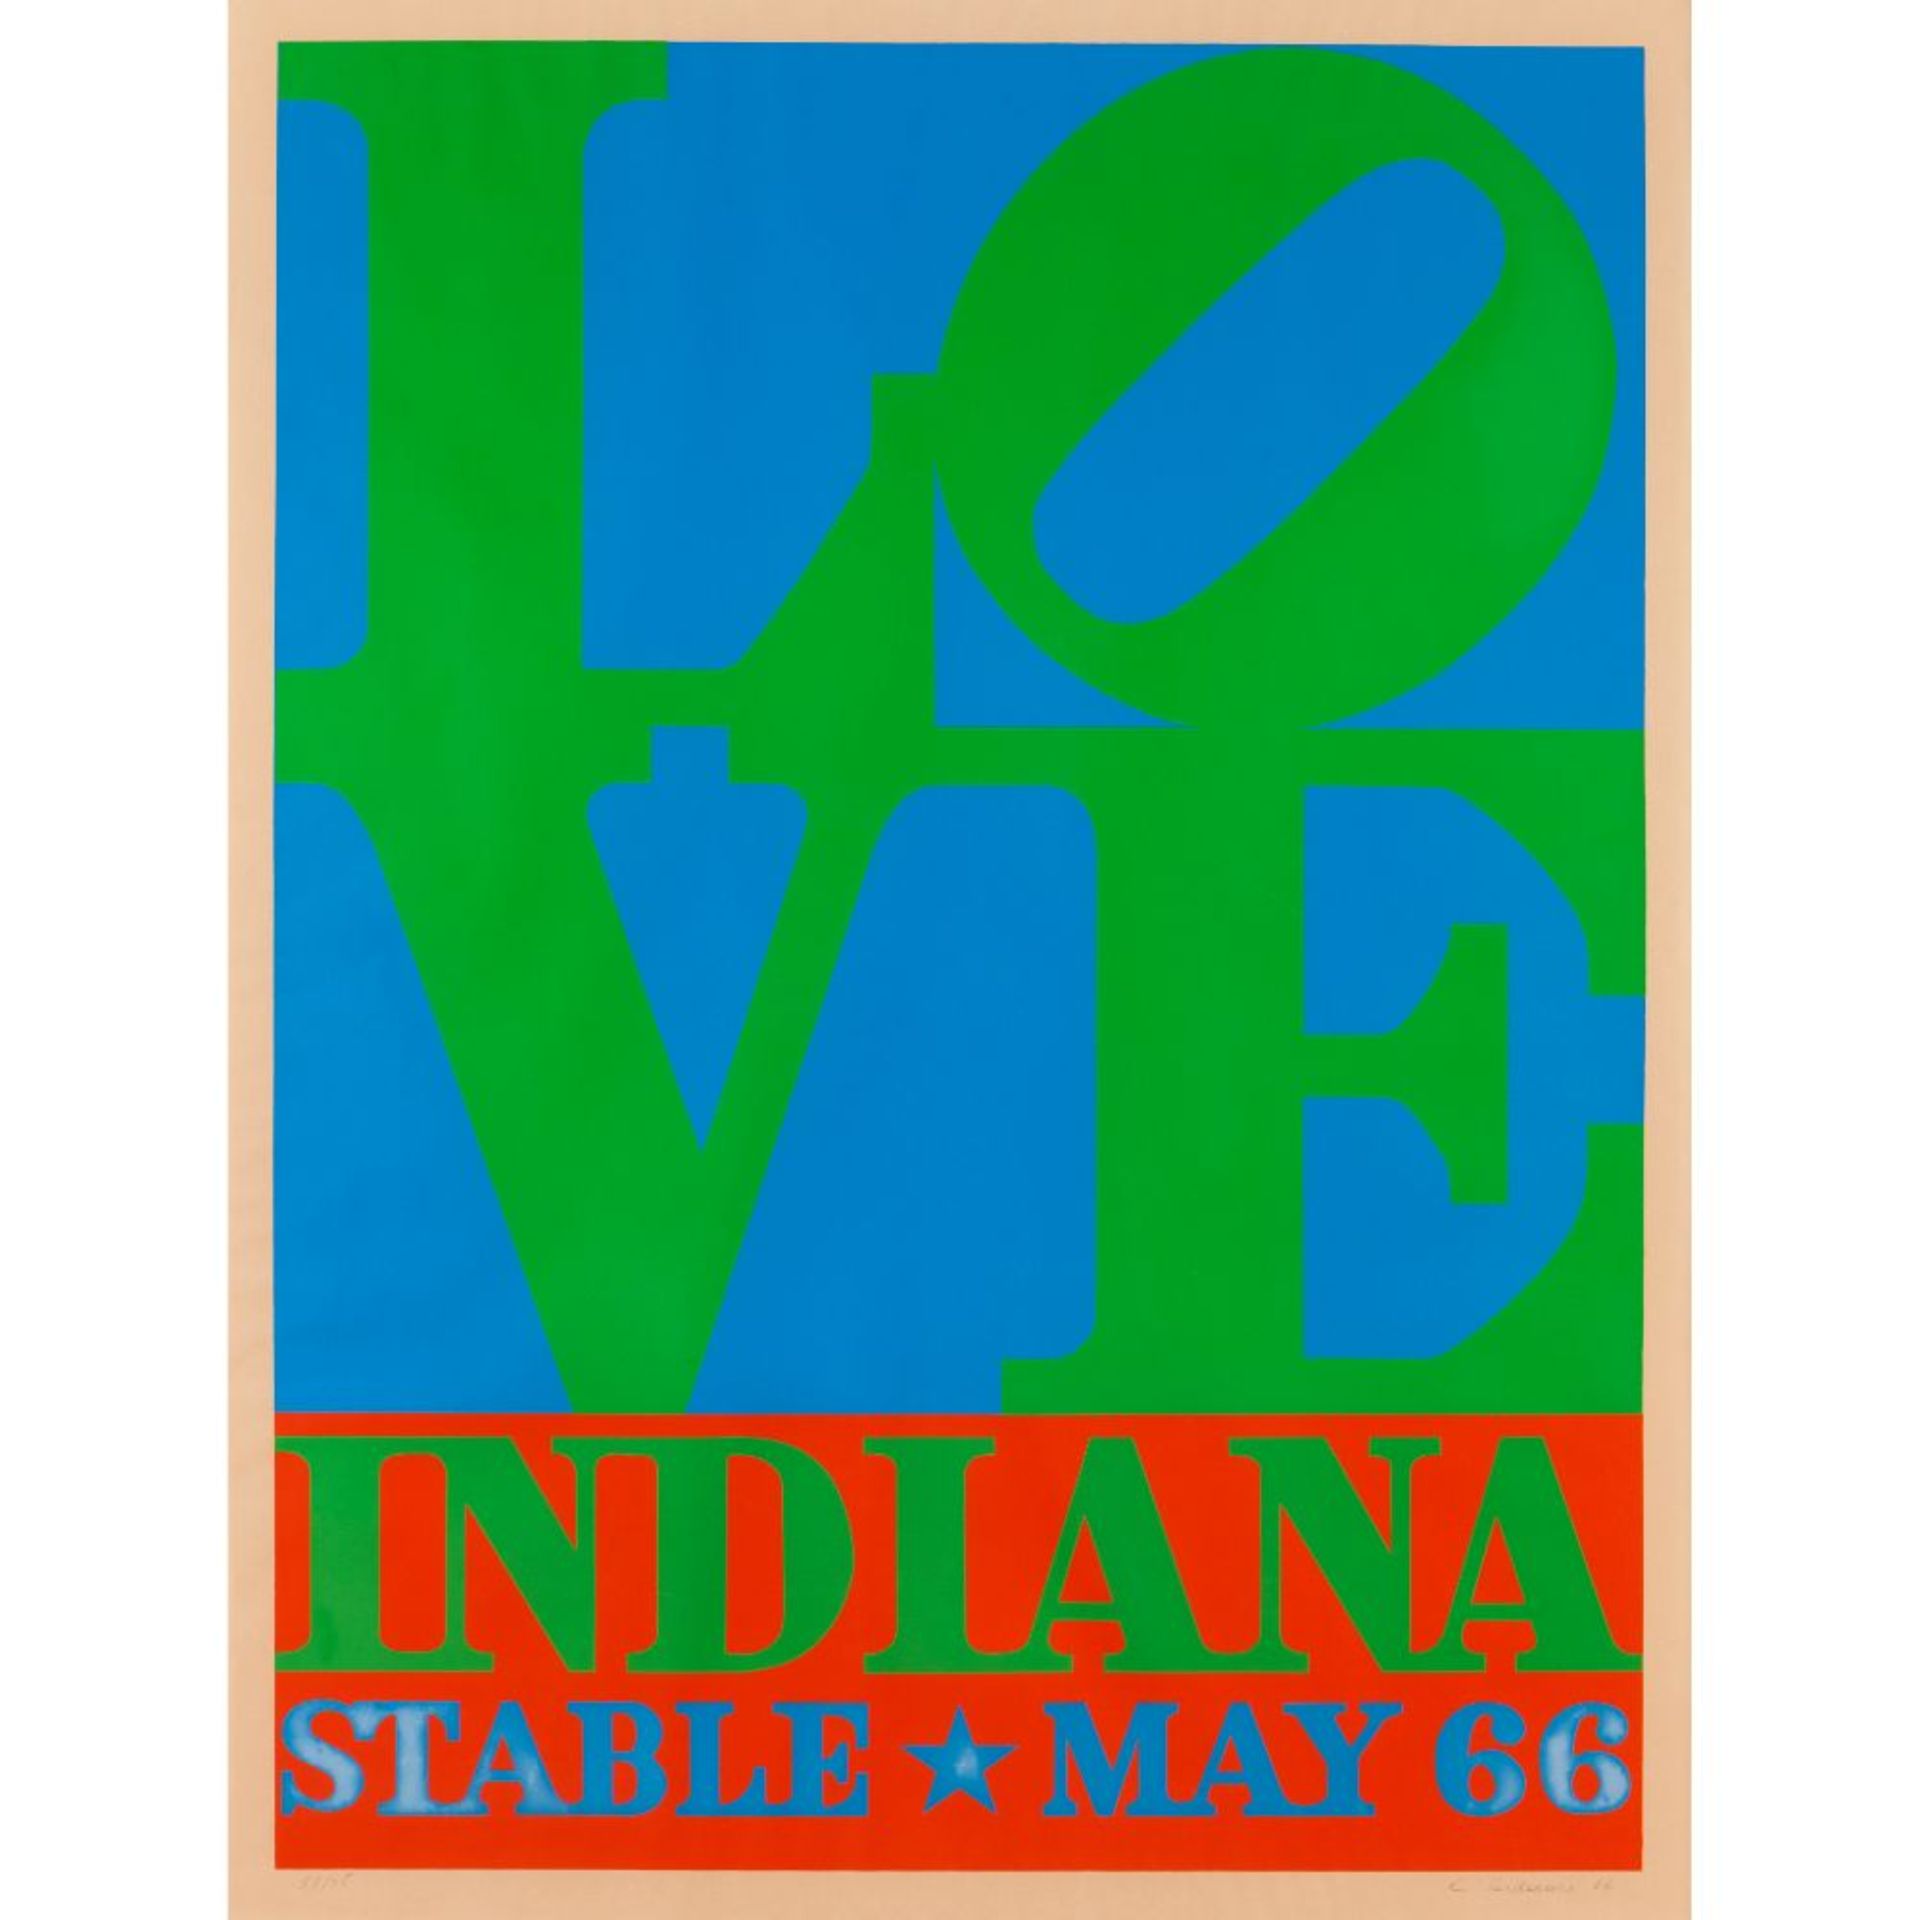 Robert Indiana (1928-2018)"Love, Indiana Stable May 66", 1966